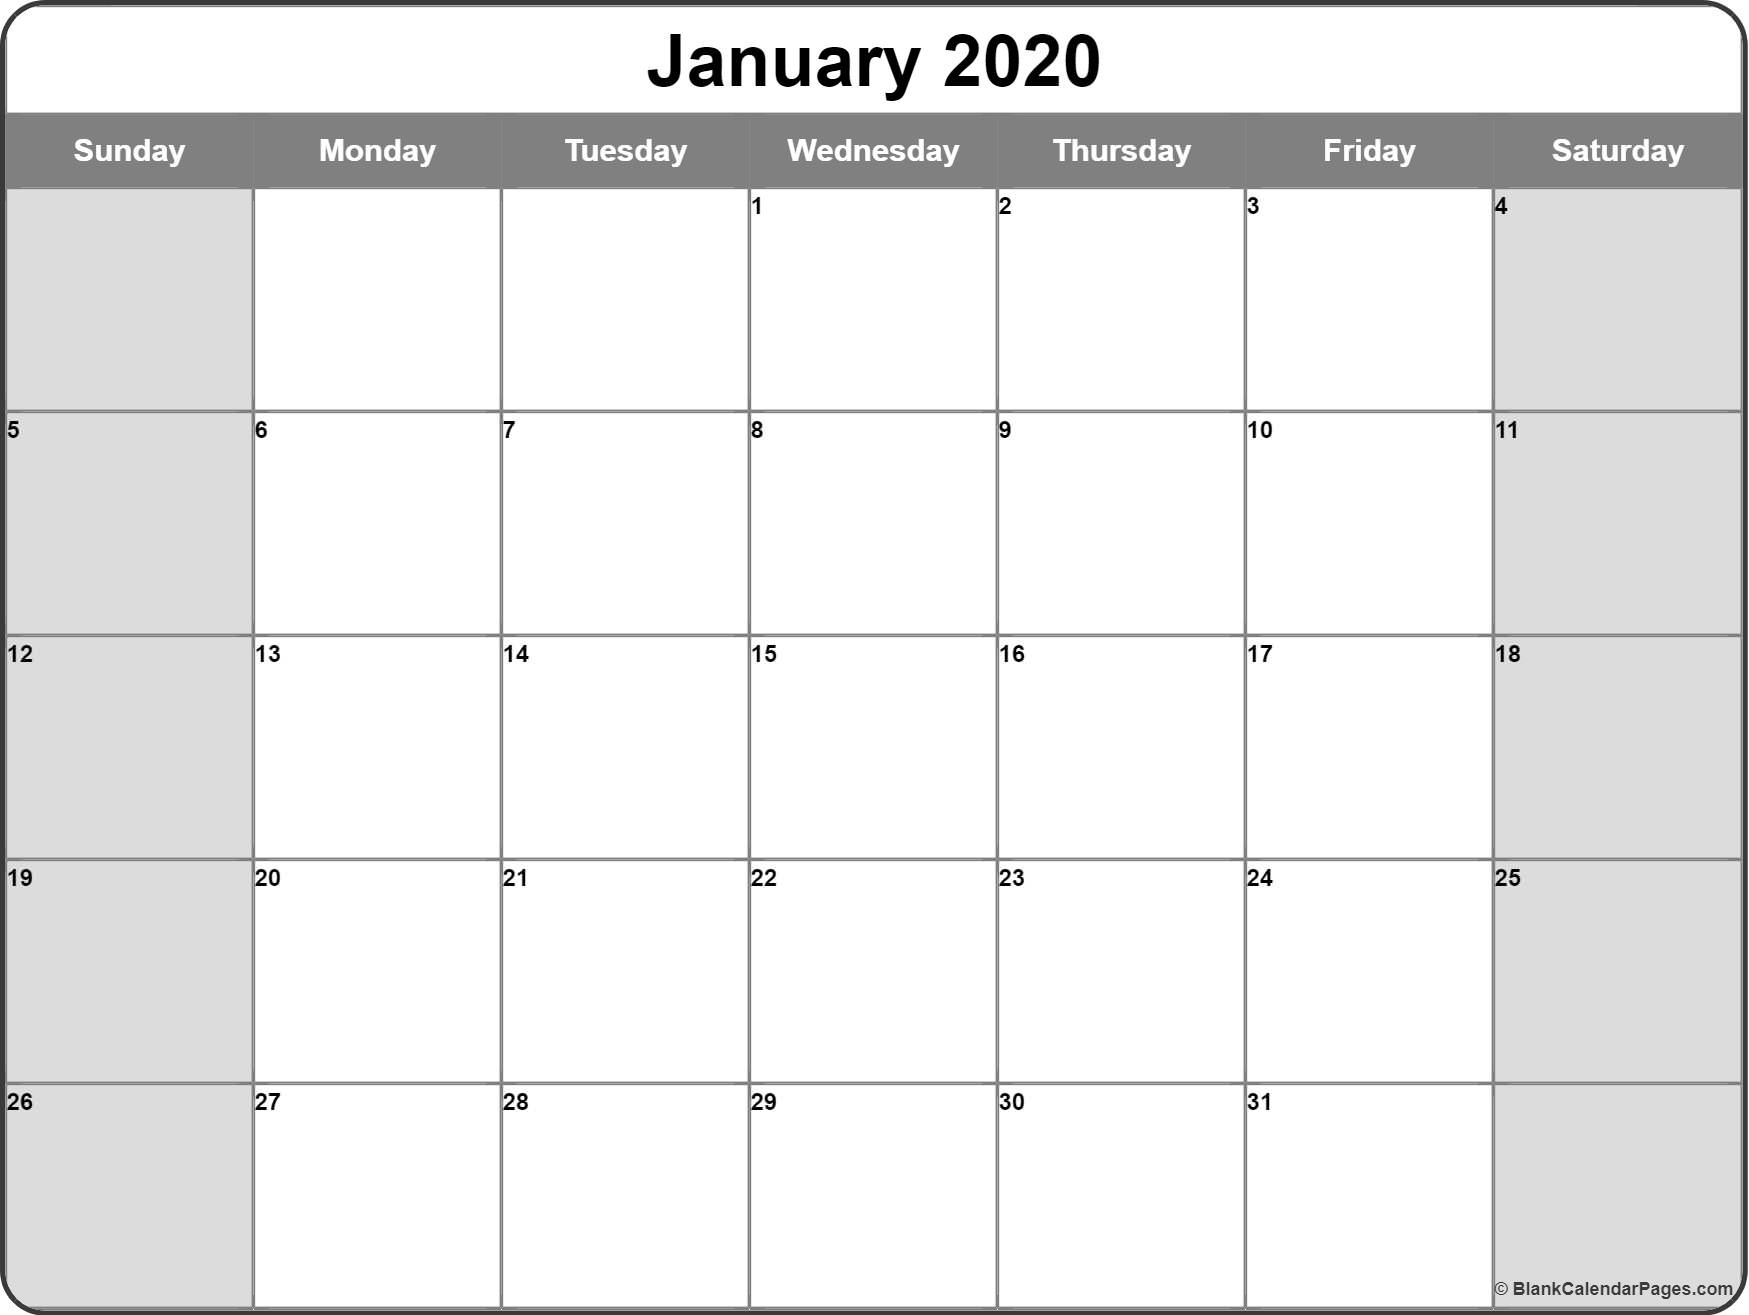 January 2020 Calendar | Free Printable Monthly Calendars within Free Printable 5 Day Monthly Calendar 2020